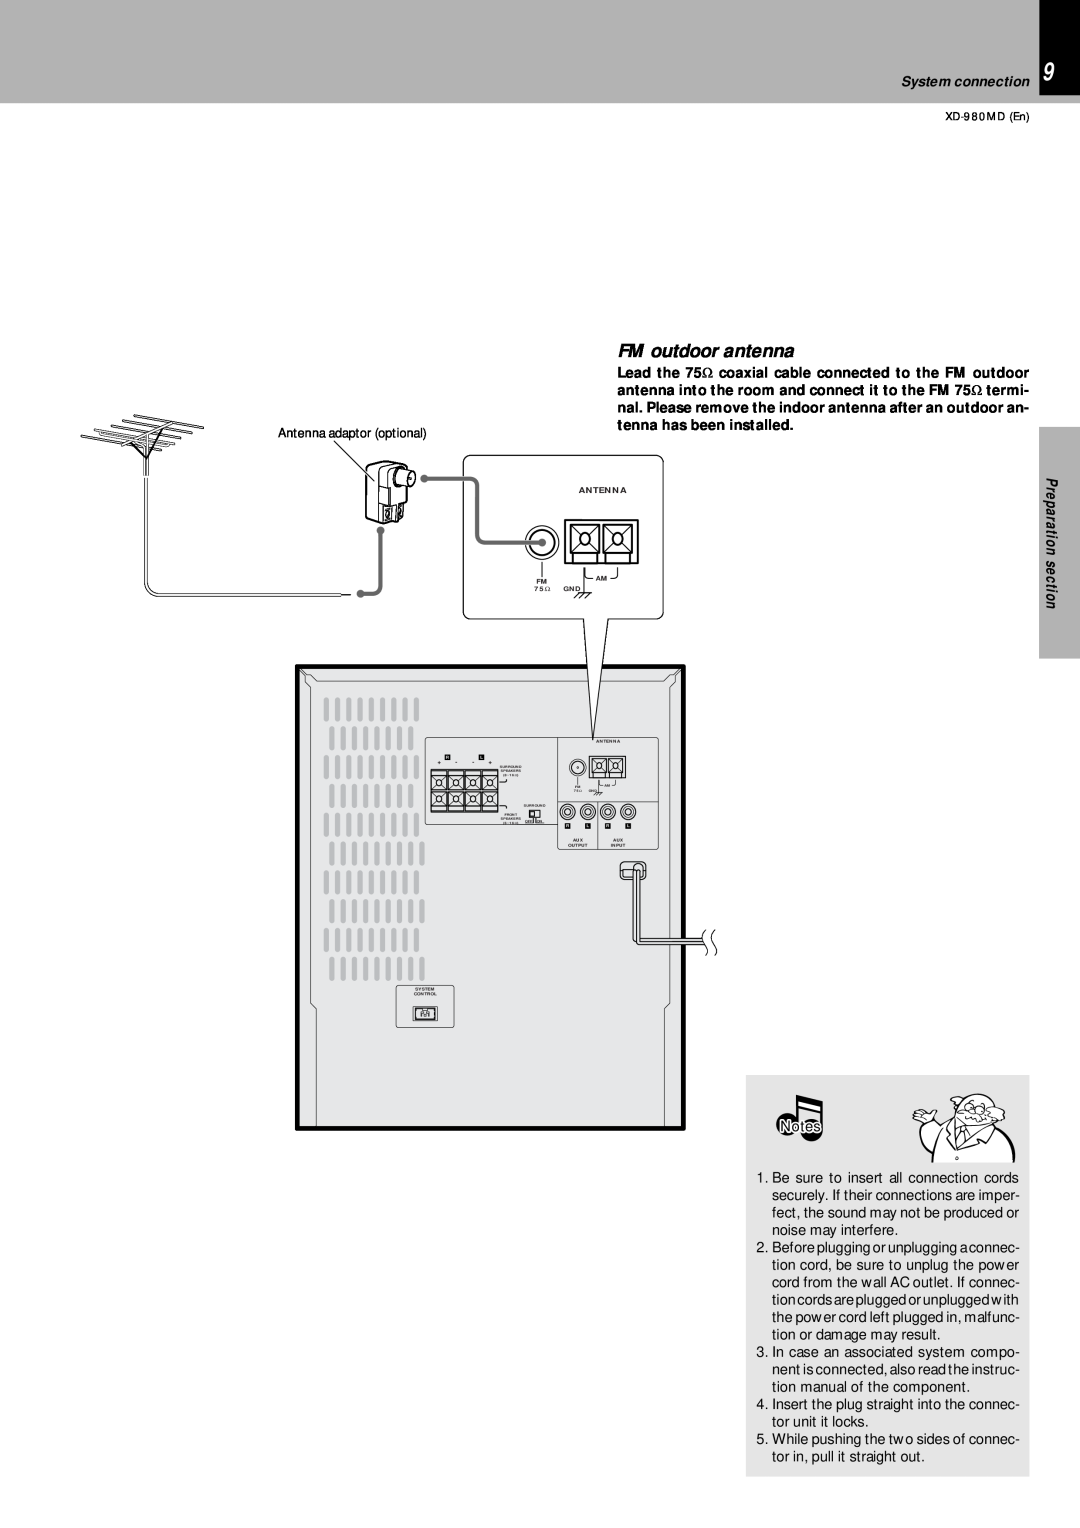 Kenwood XD-980MD instruction manual FM outdoor antenna 